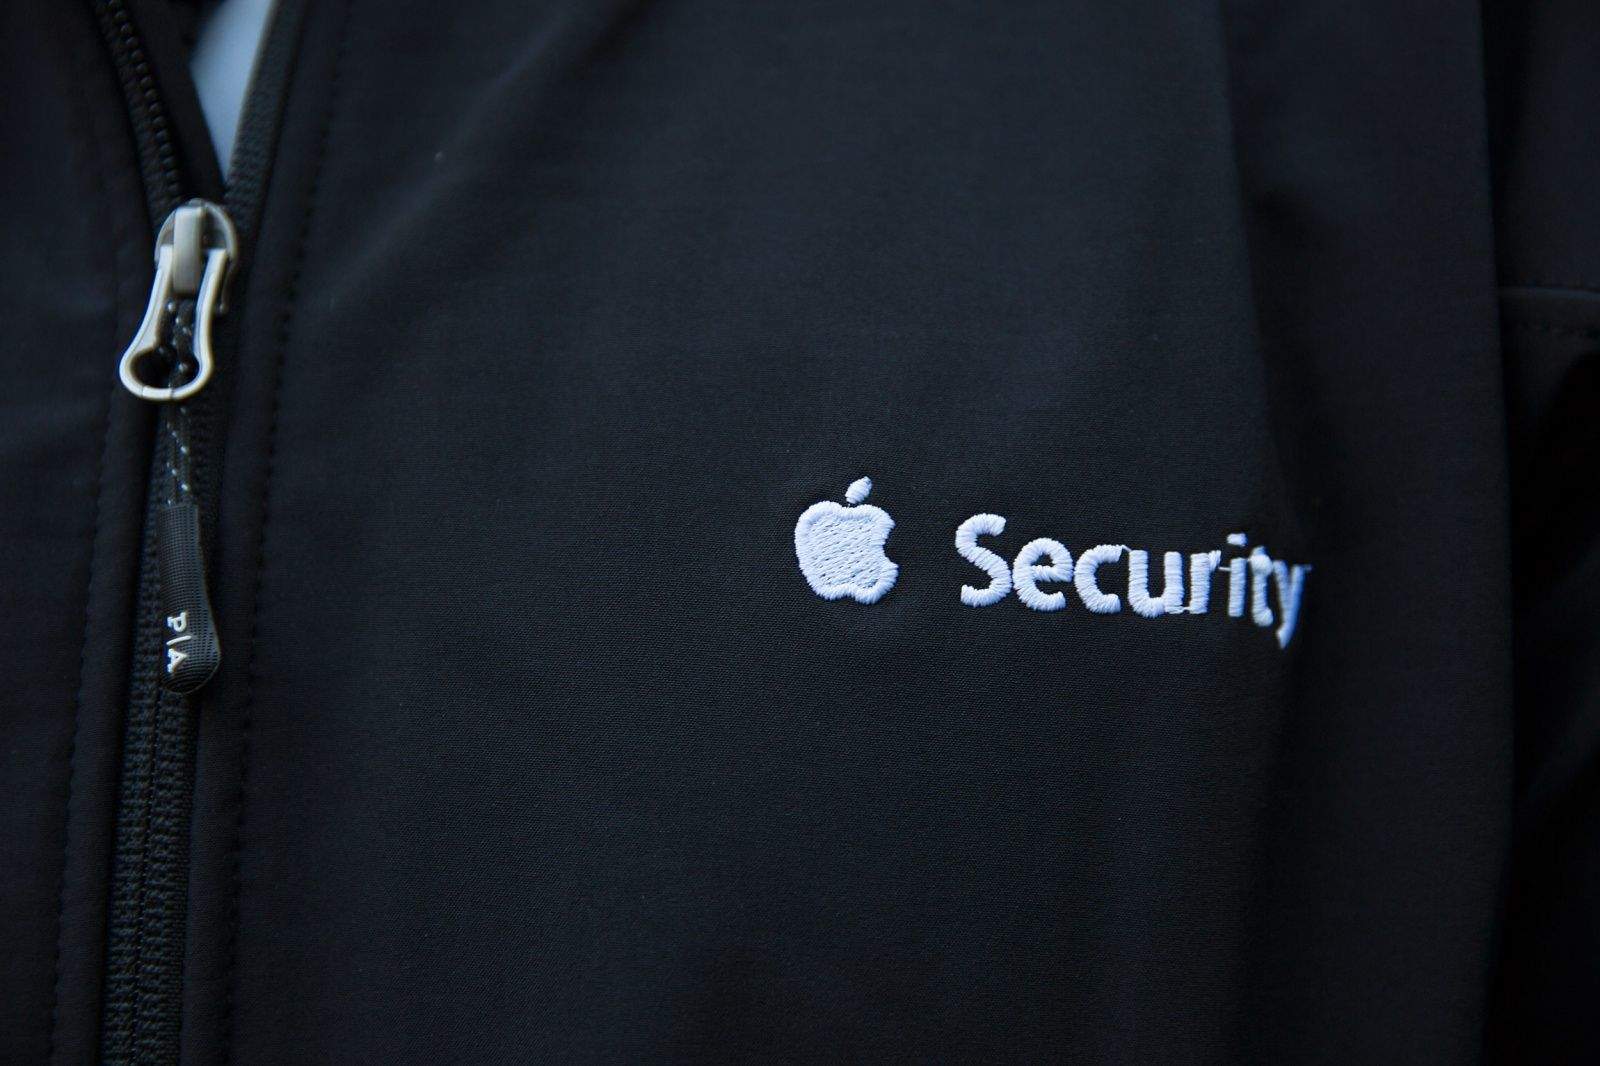 Apple Security Jacket